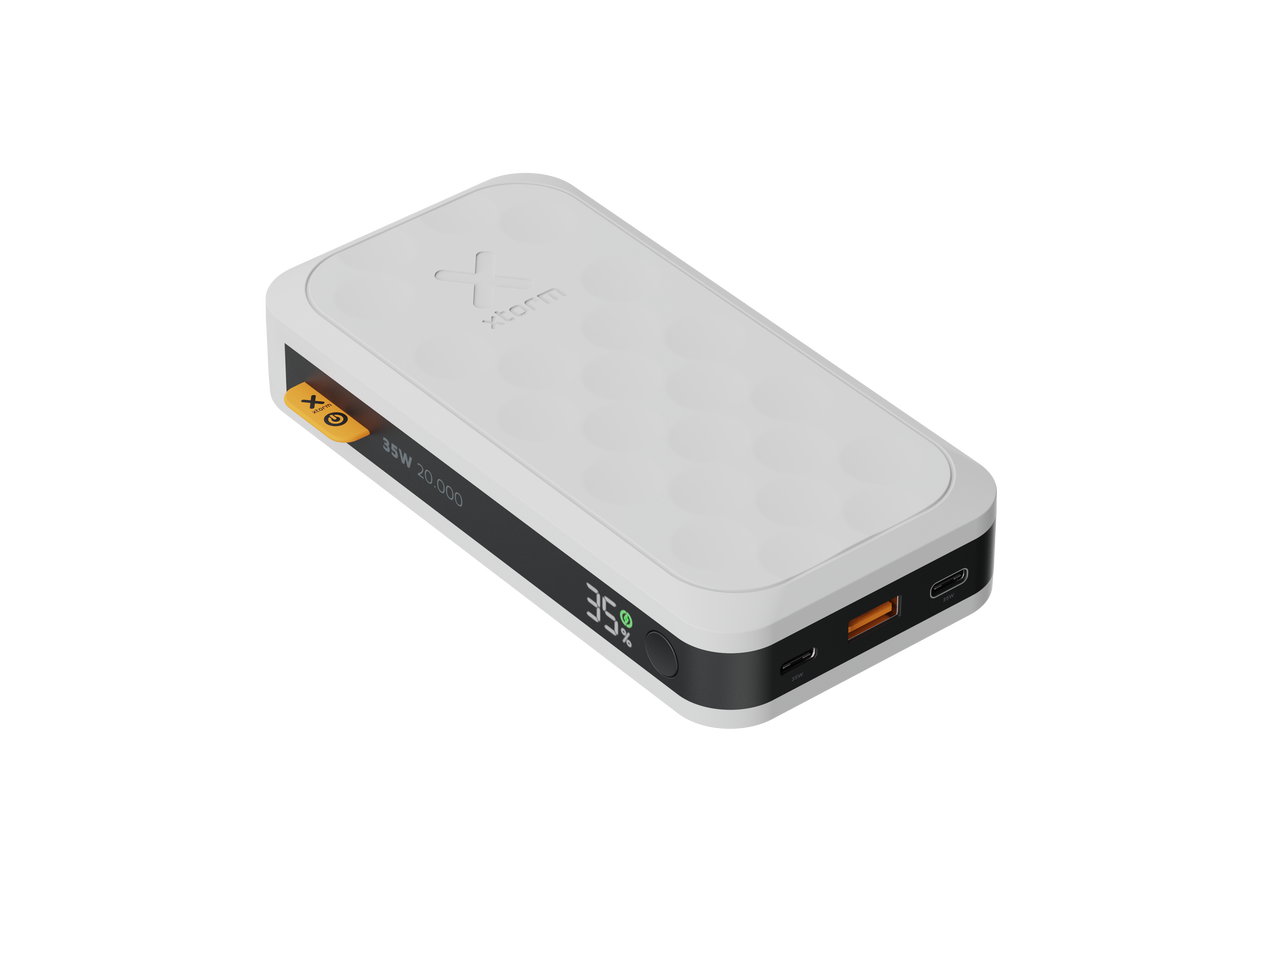 Batería externa 20W / 10000mAh, USB-C Power Delivery + 2x USB 3.0, Xtorm  Fuel Series - Gris - Spain